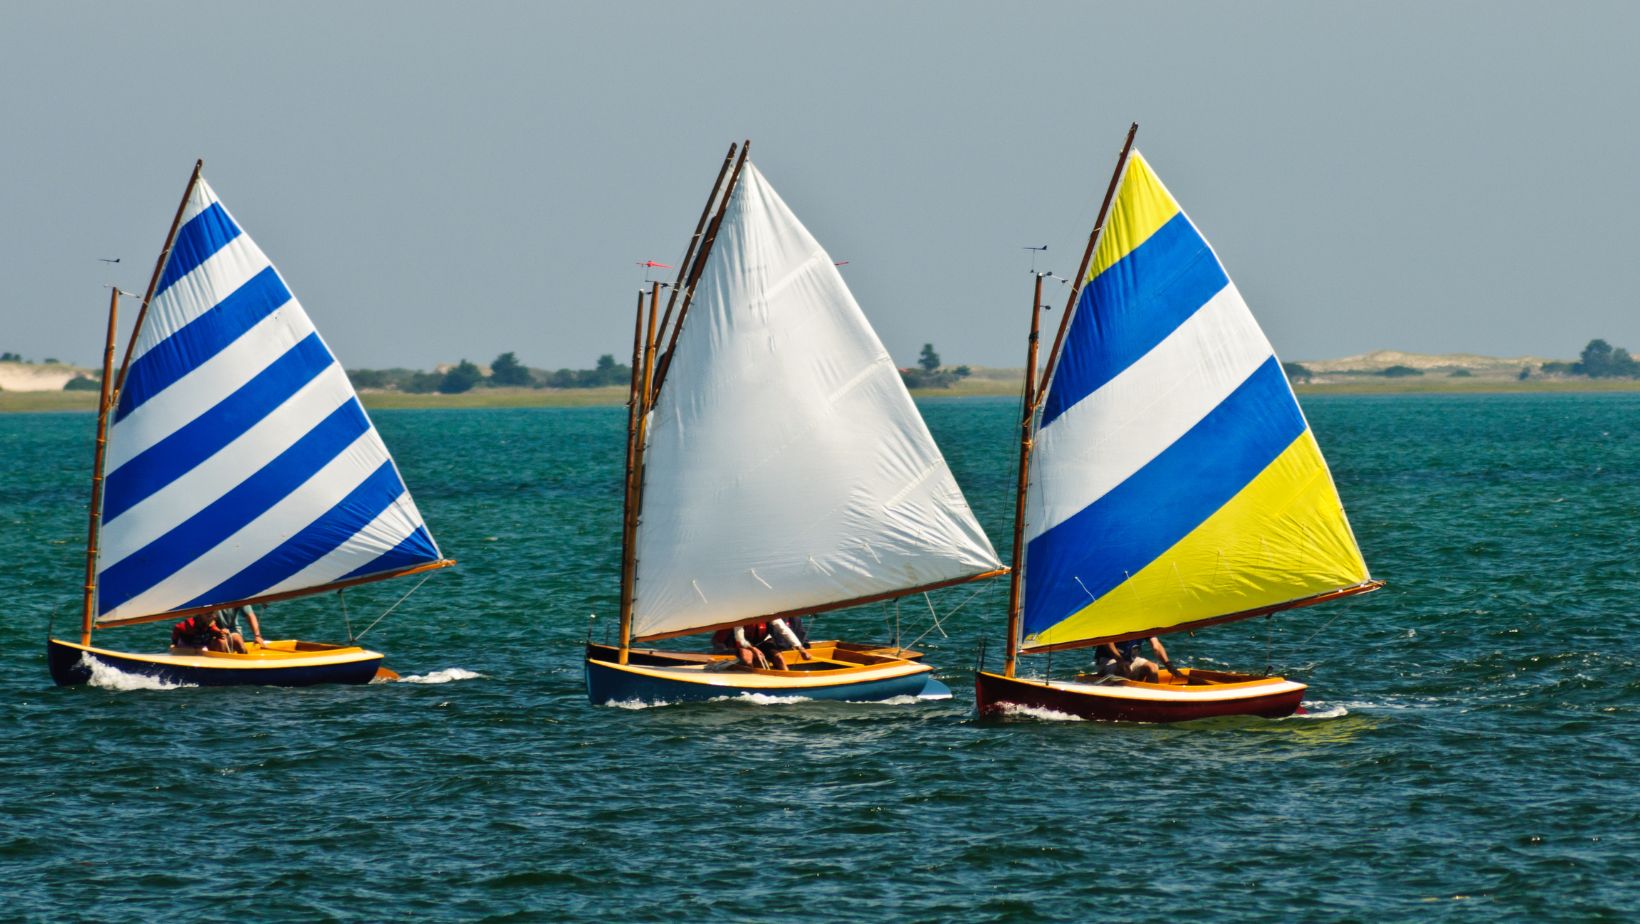 what should a sailboat do when approaching a pwc